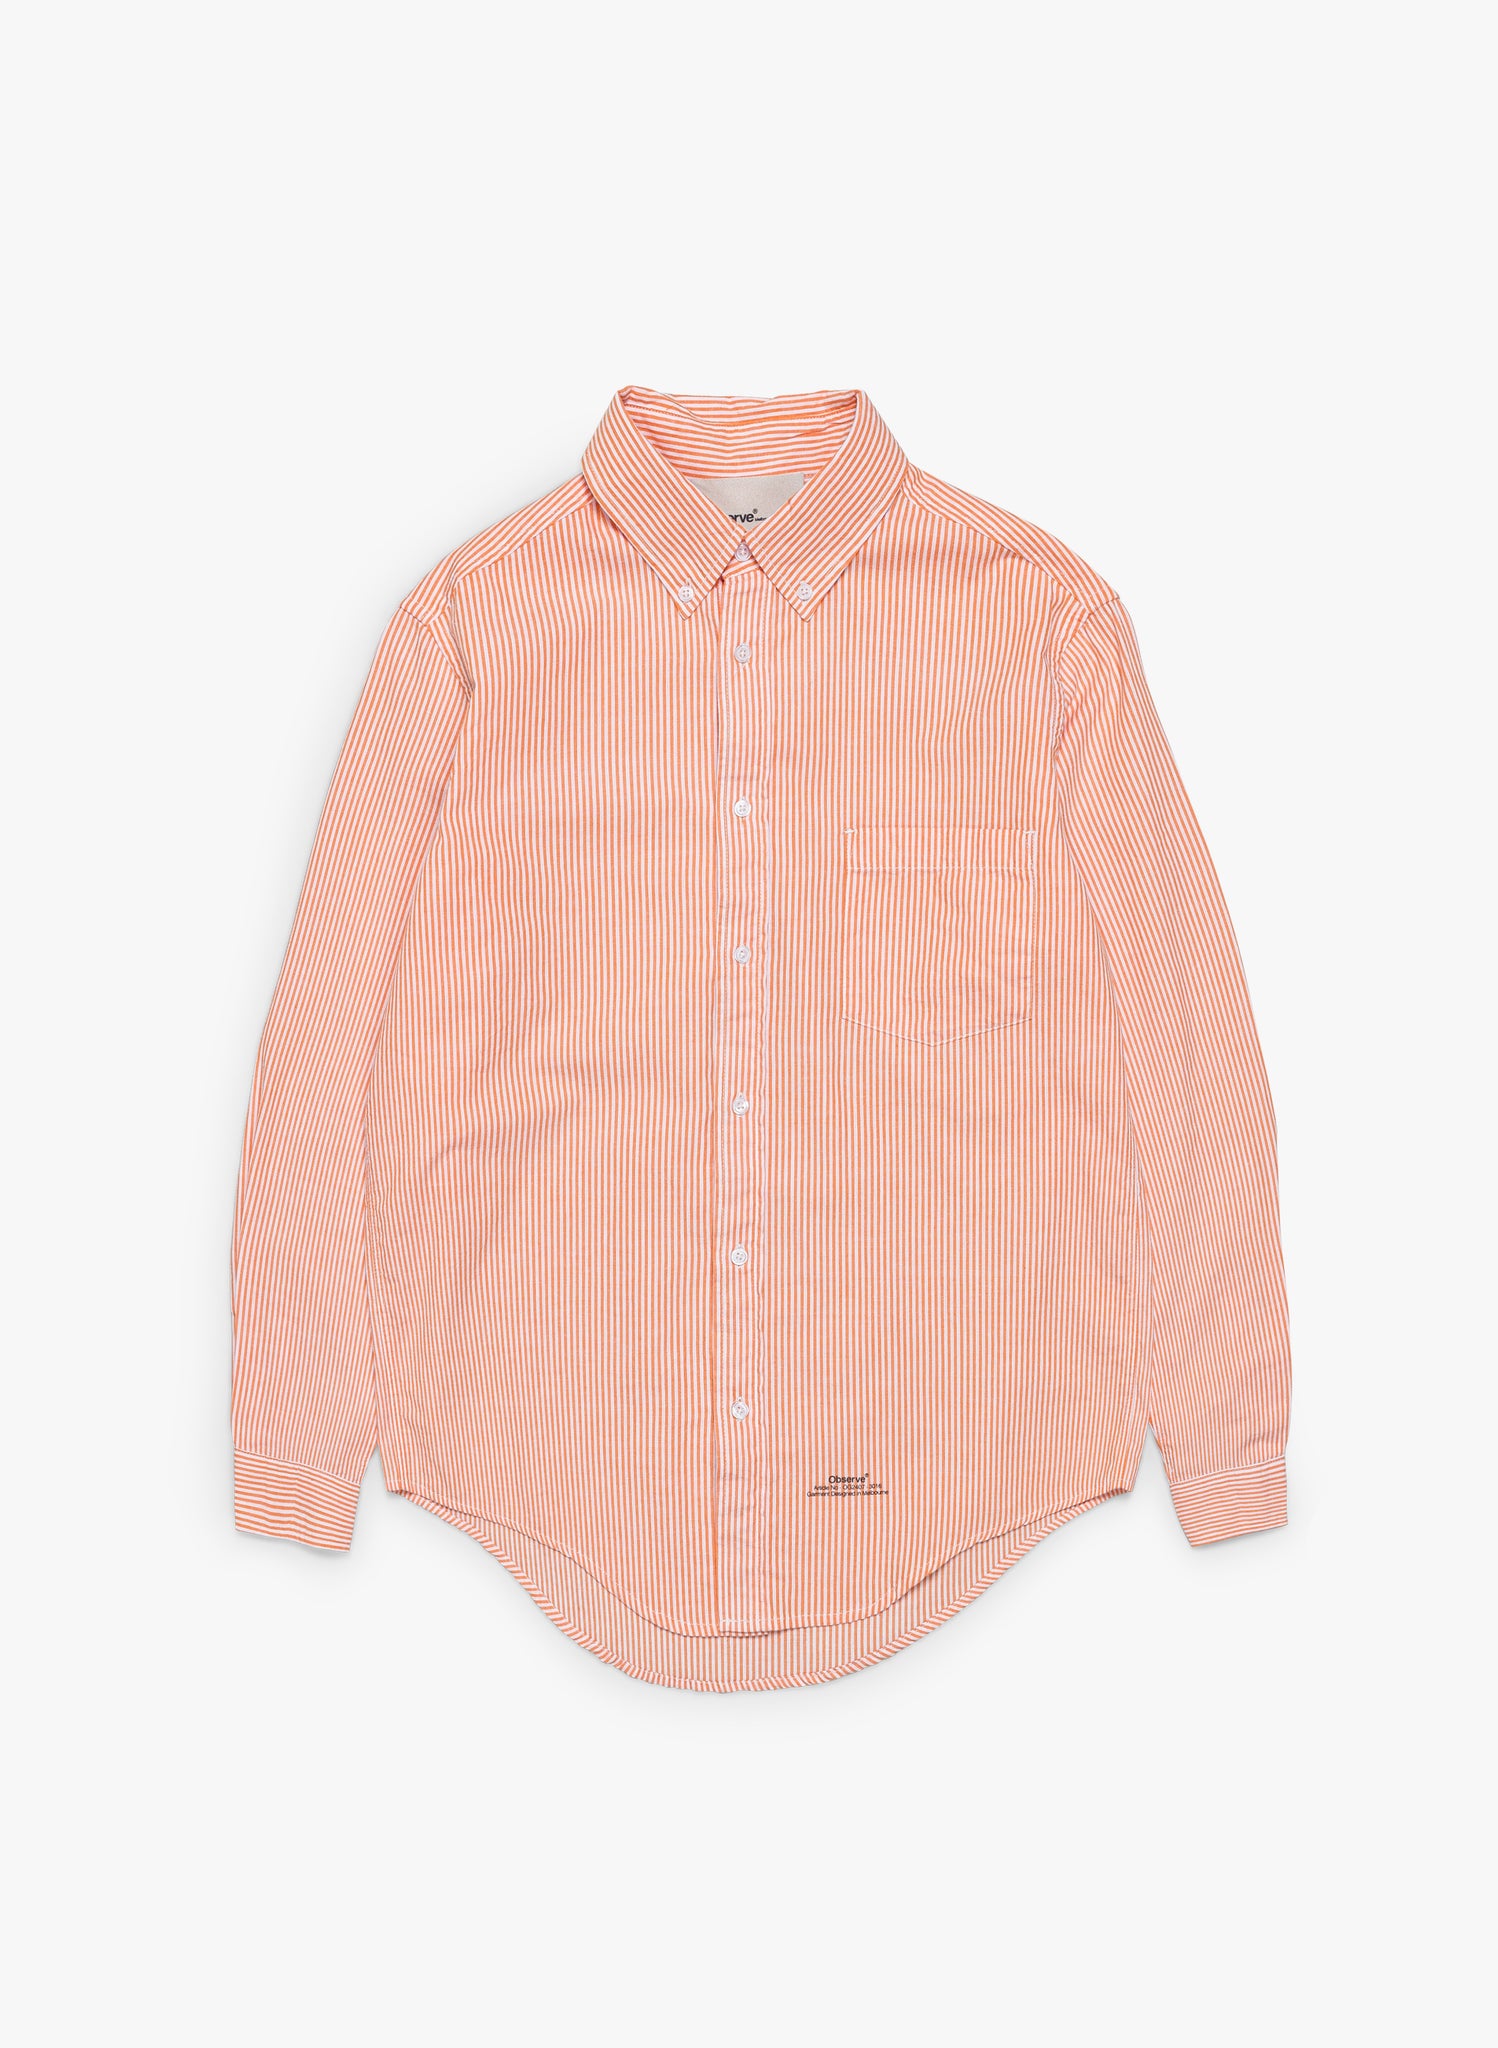 Pinstripe Oxford Shirt - Orange/White